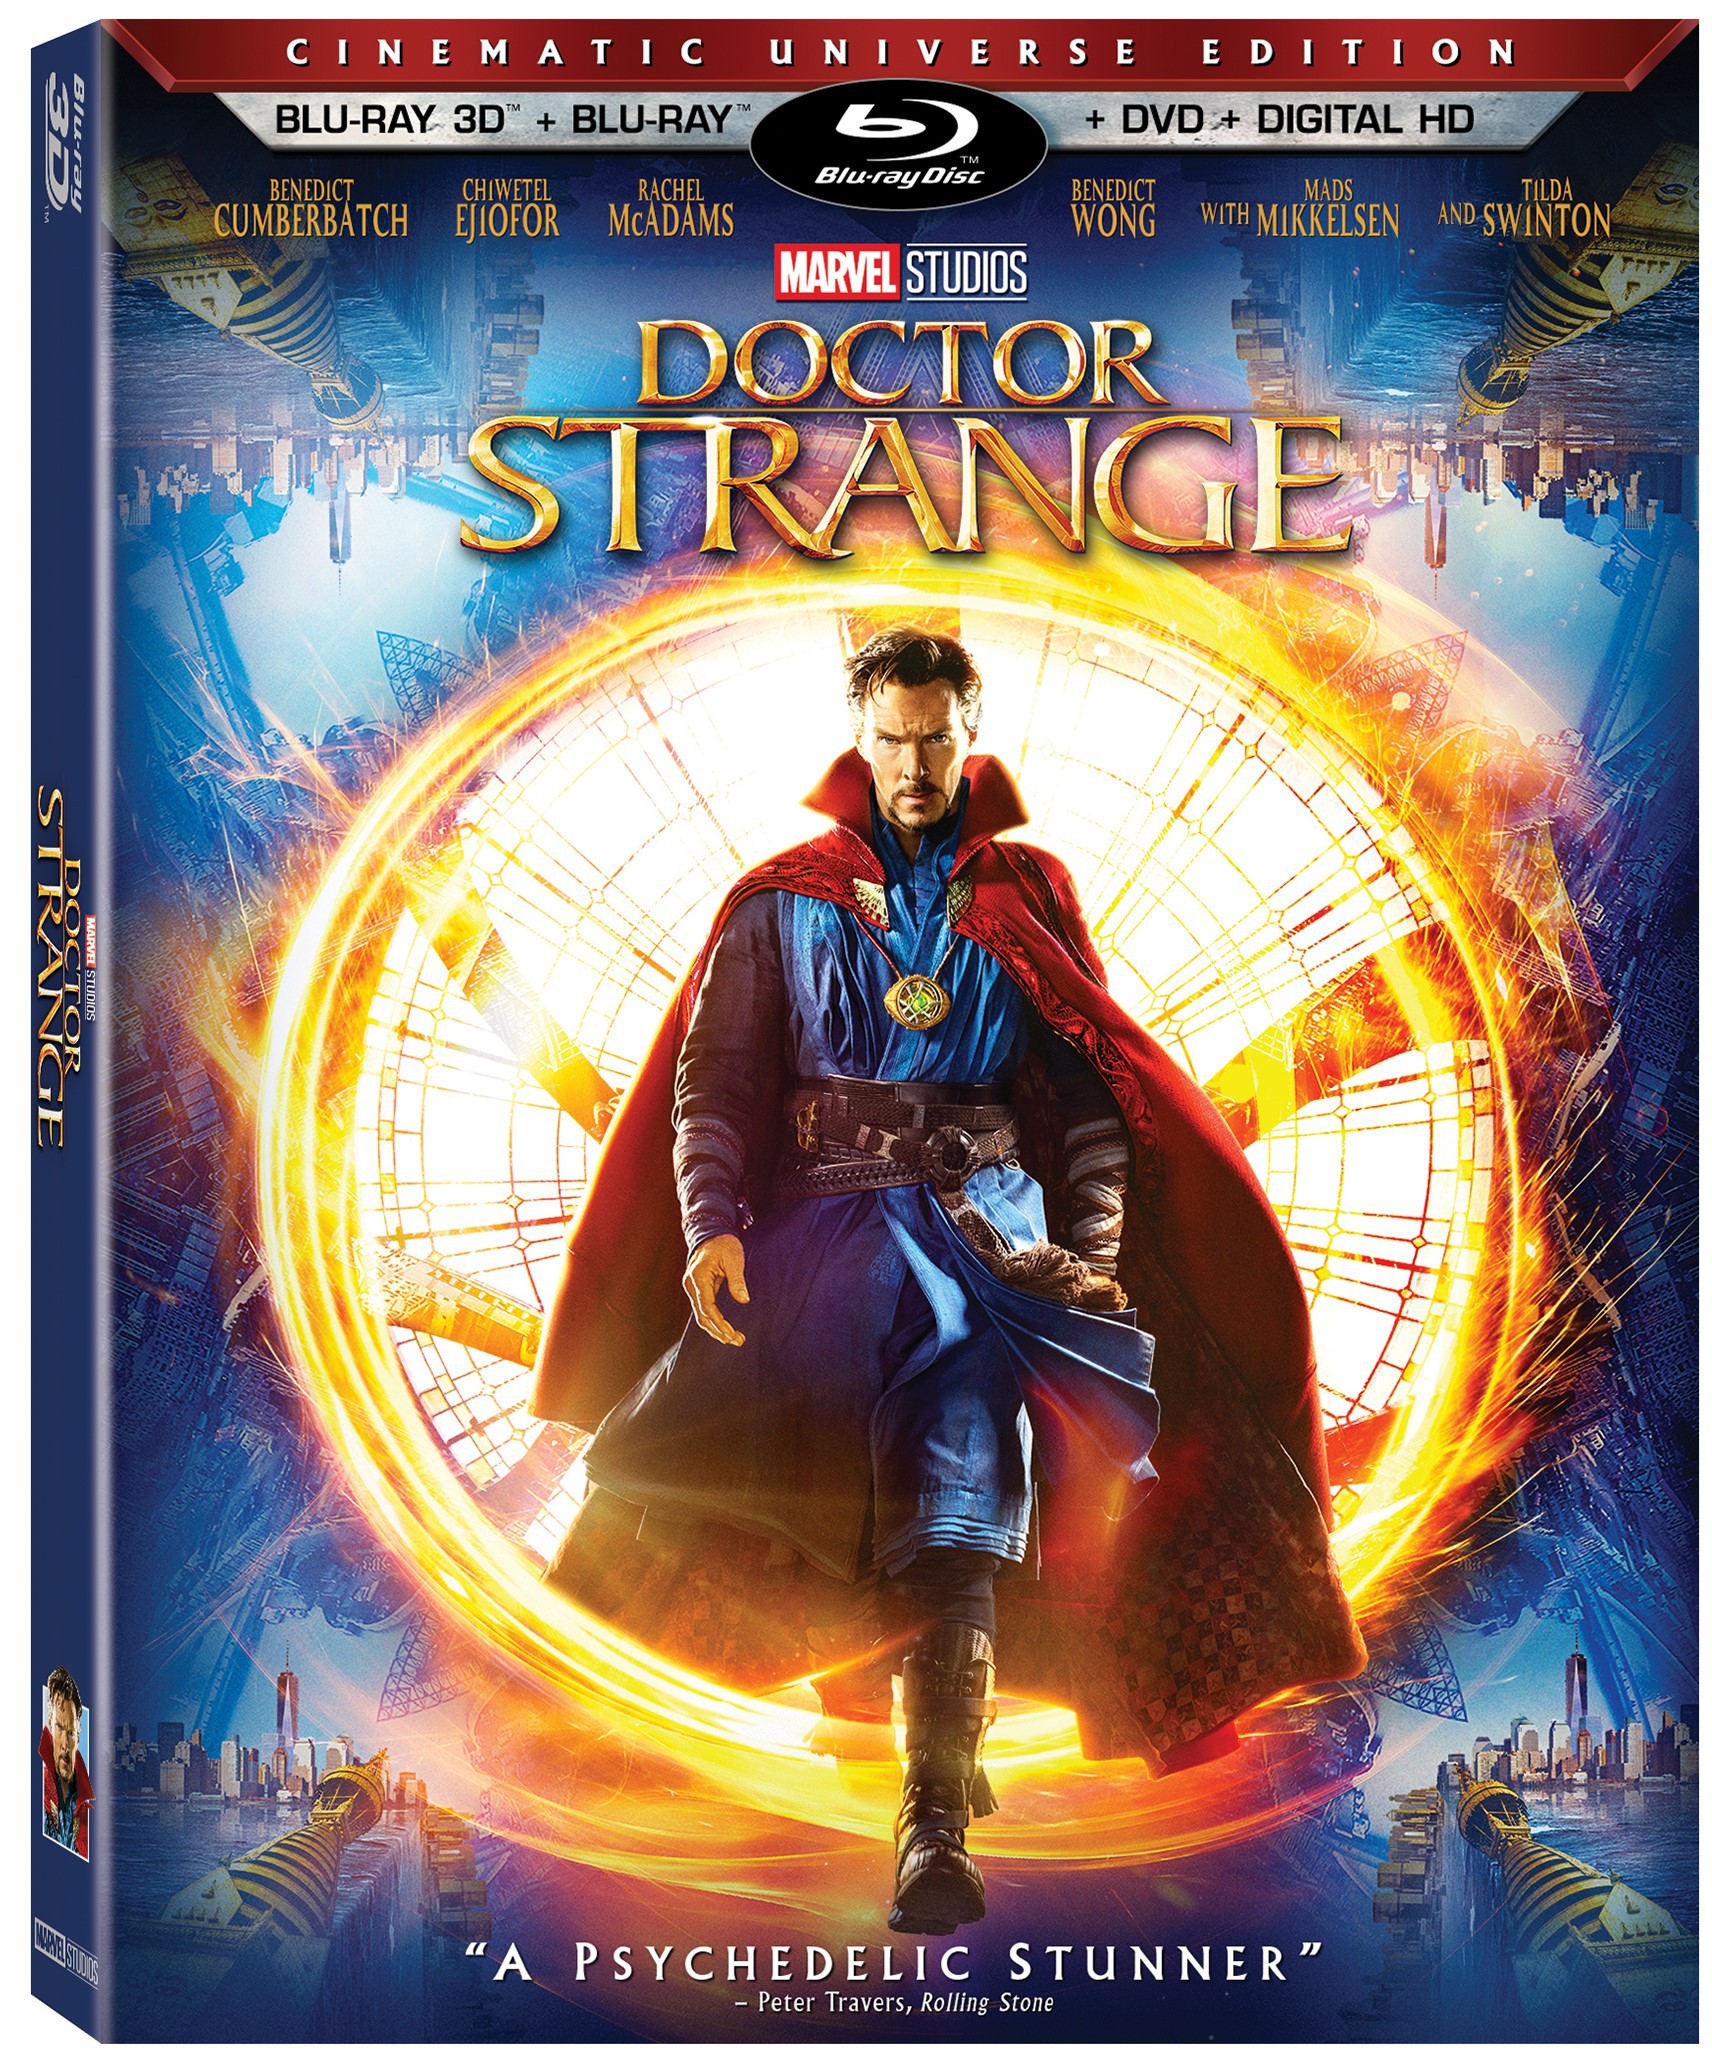 DoctorStrange3D Doctor Strange Blu-Ray & Digital Release Date Announced